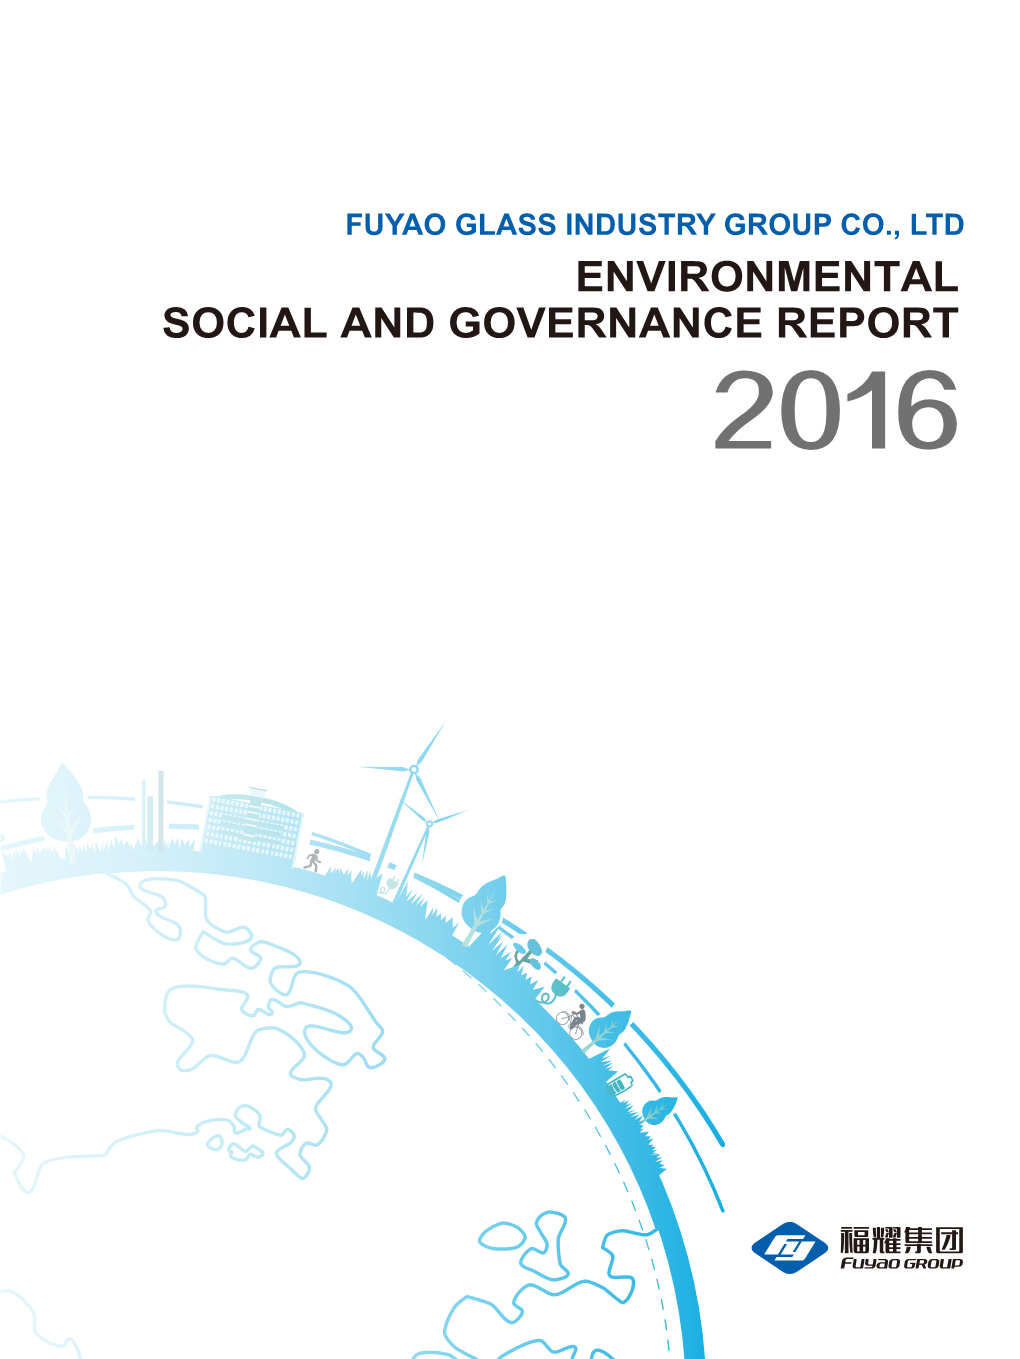 Environmental Social and Governance Report ���� ���������������